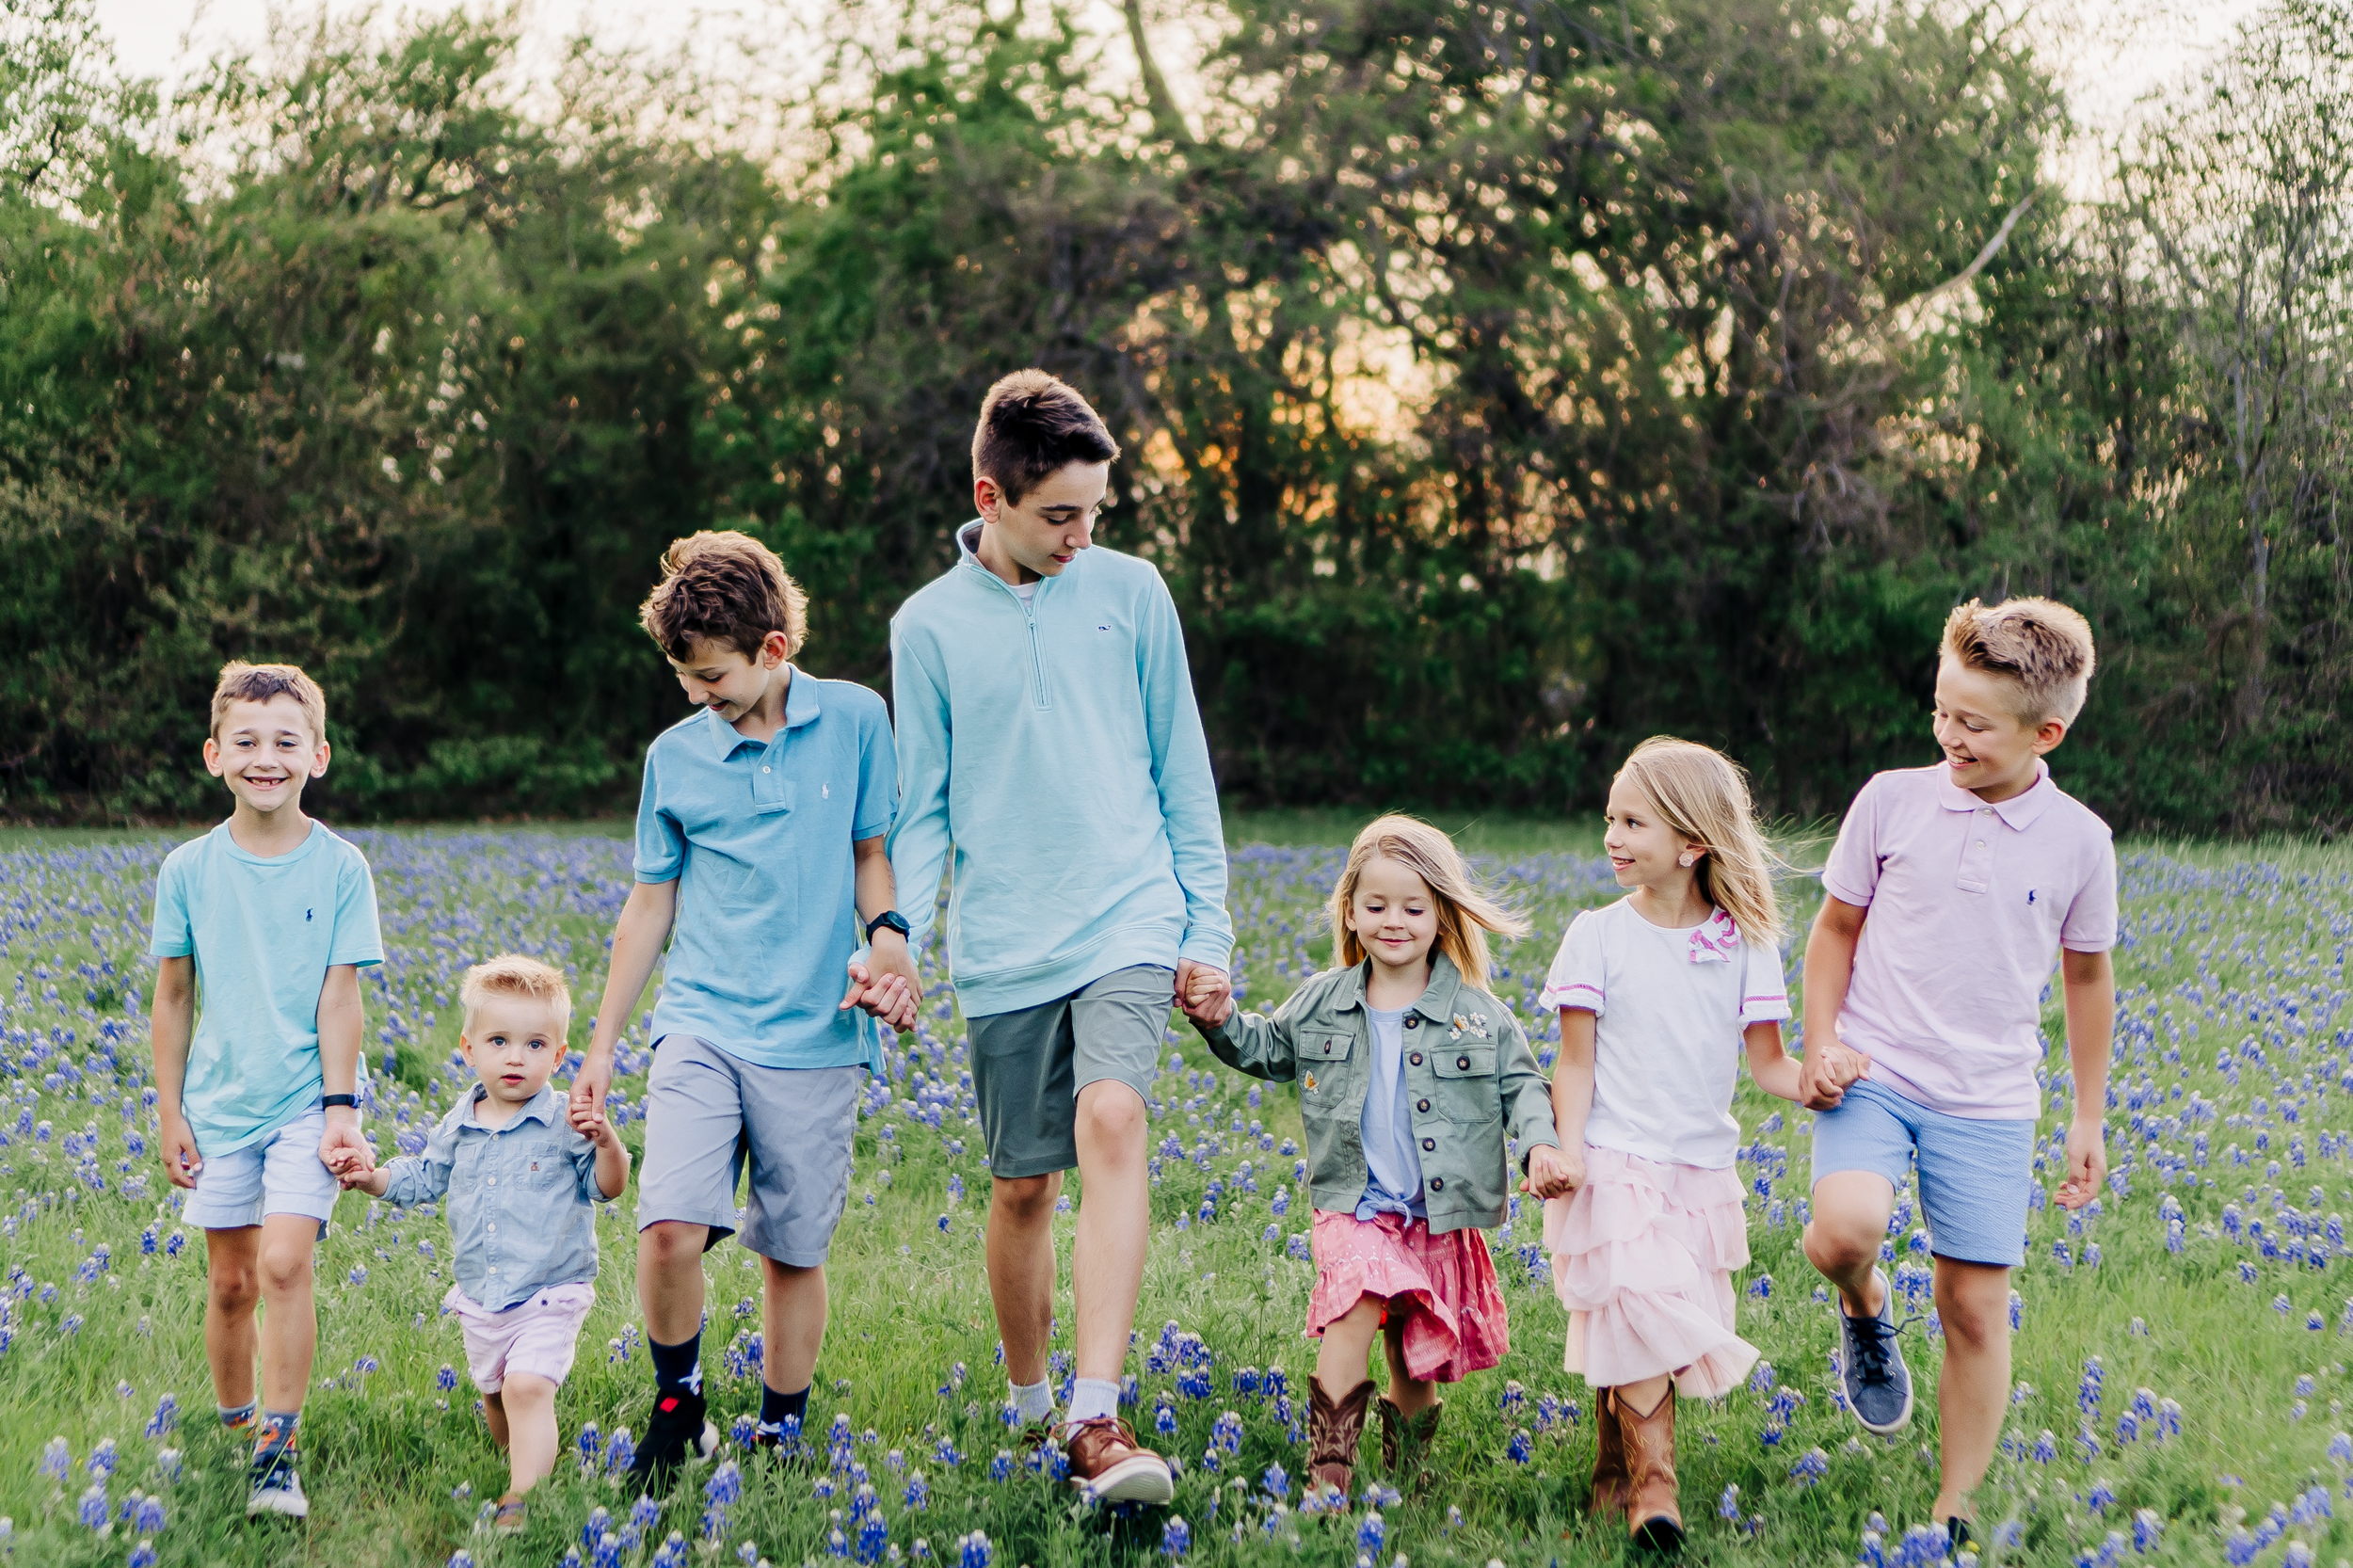 How to have stress free family bluebonnet photos | Plano, Texas Family Photographer | via brittnierenee.com